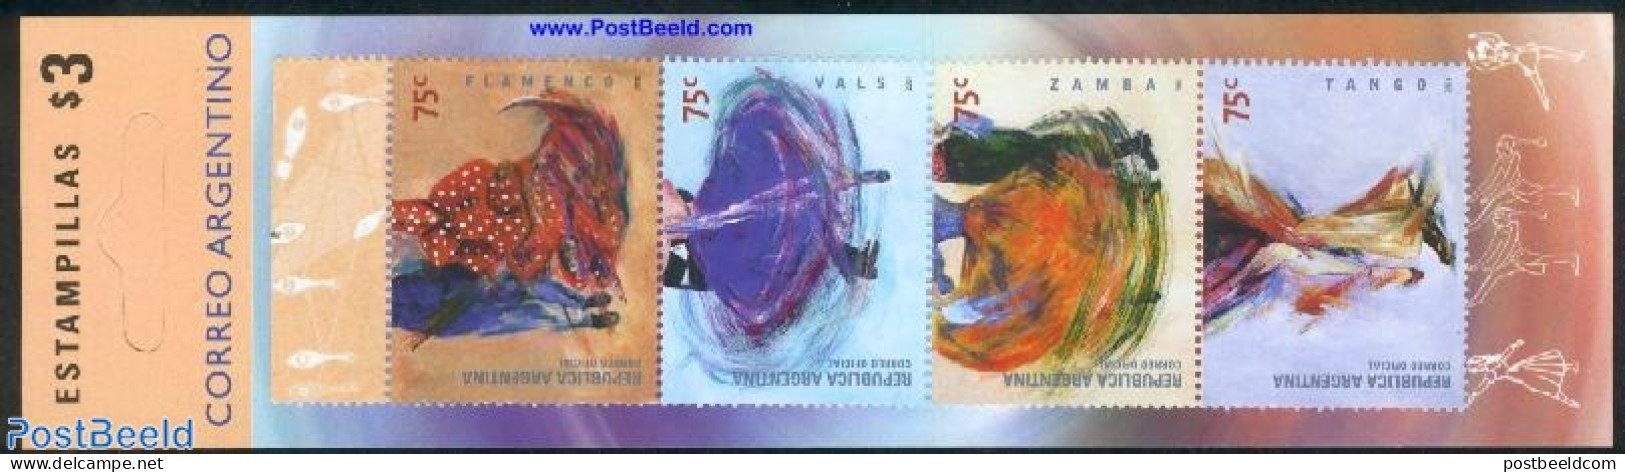 Argentina 2001 Traditional Dances 4v Issued In Booklet, Mint NH, Performance Art - Dance & Ballet - Stamp Booklets - Unused Stamps